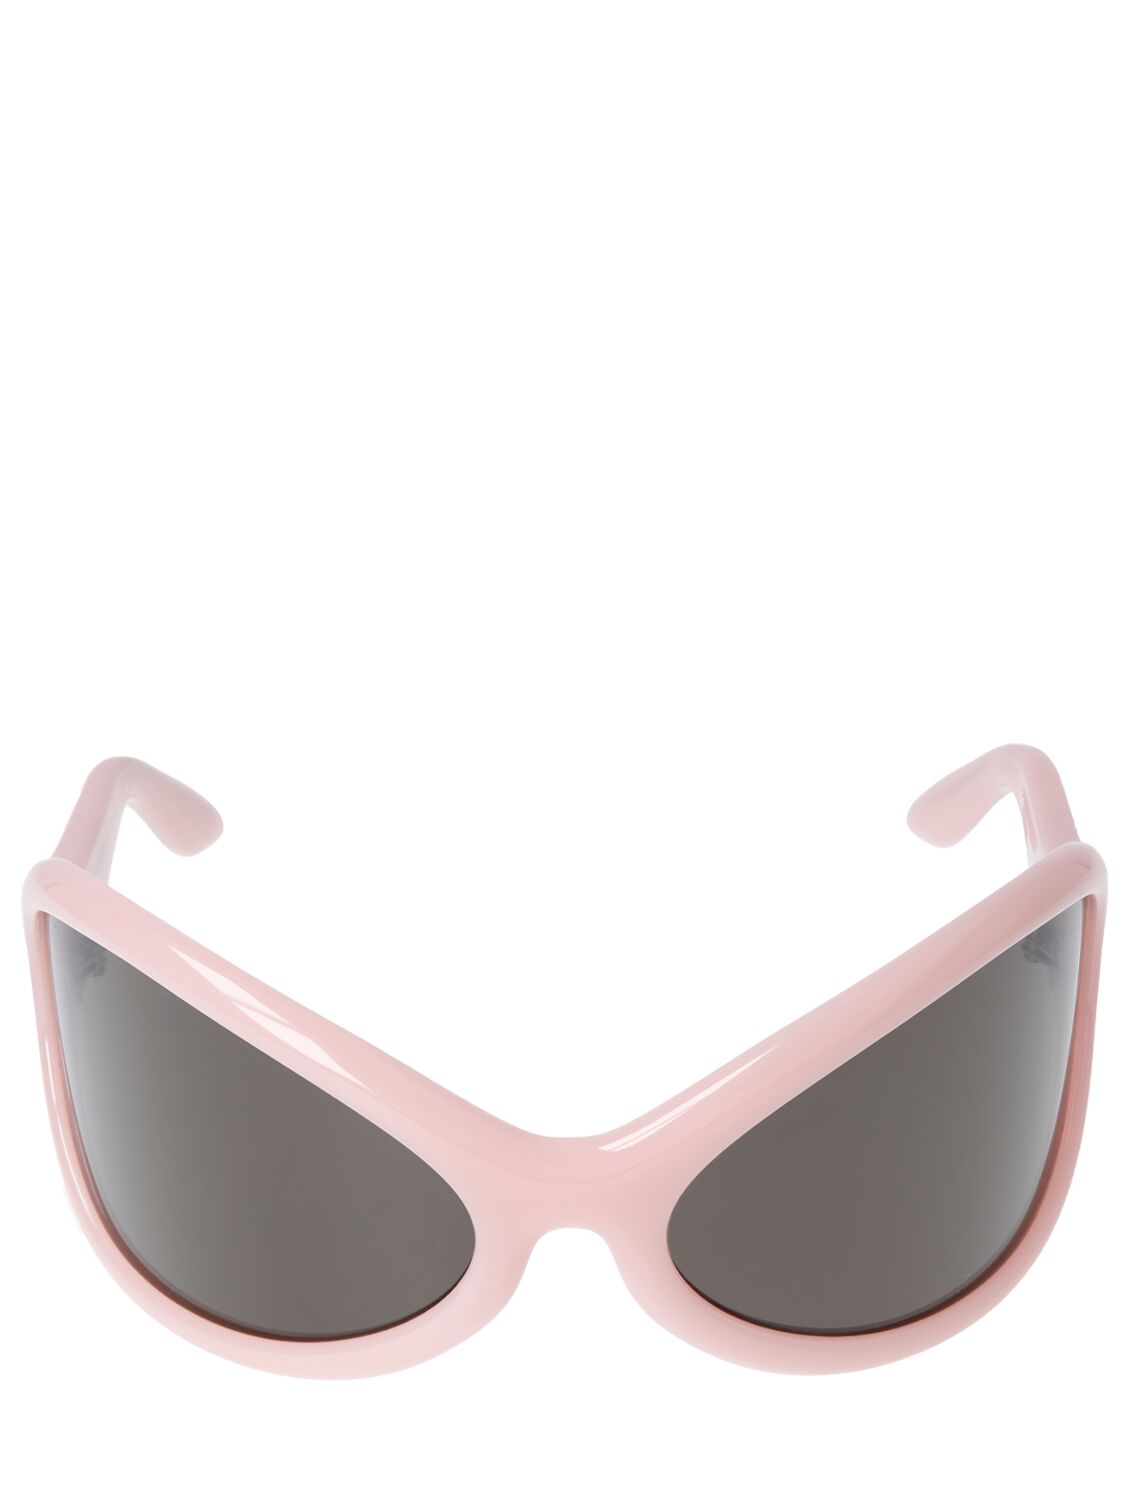 Image of Arcturus New Oval Acetate Sunglasses